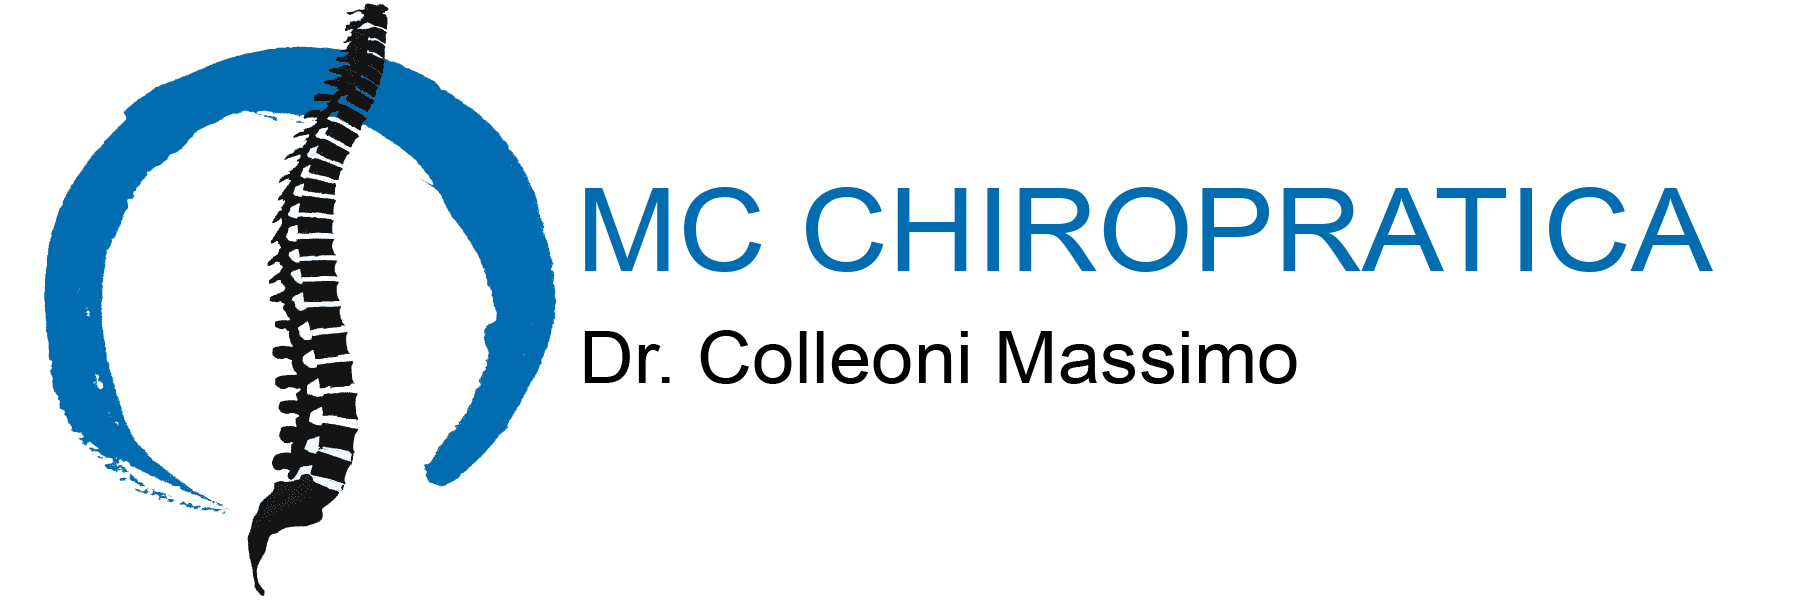 MC CHIROPRATICA